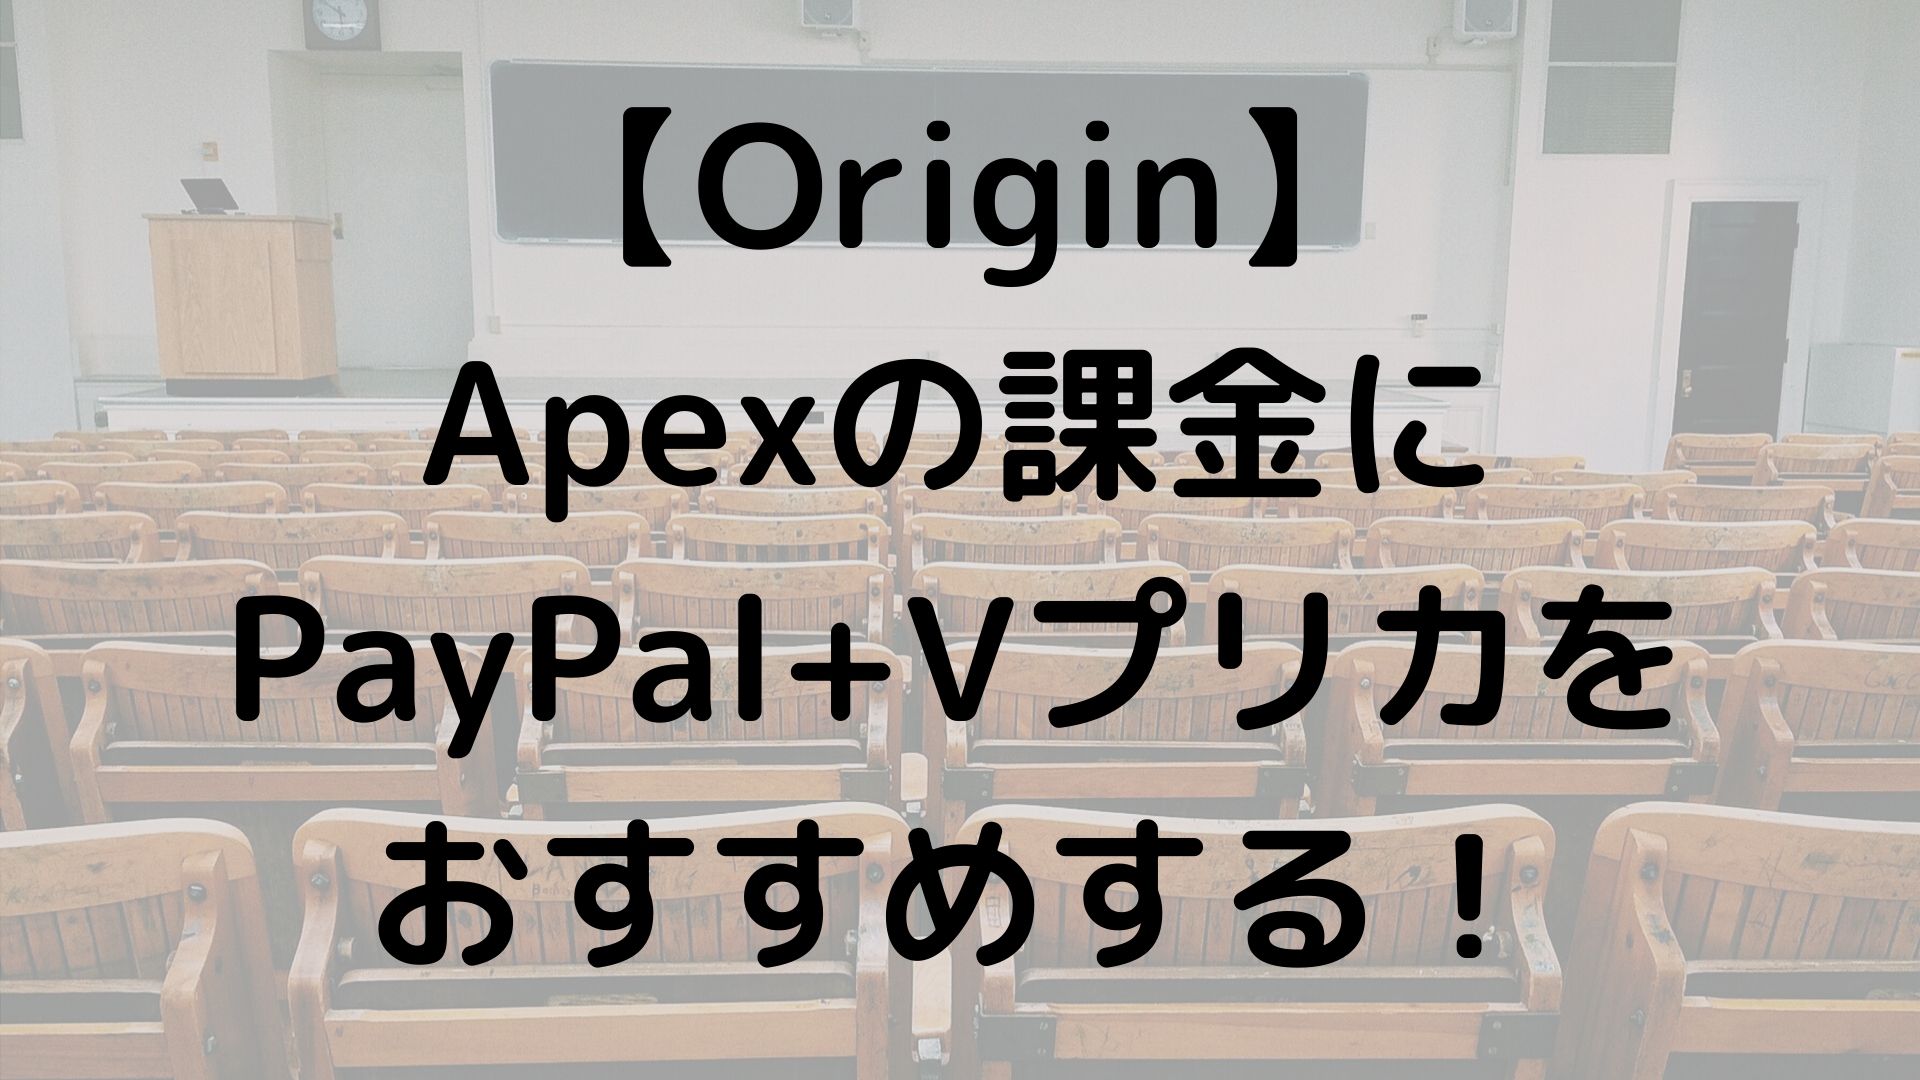 Origin Apexの課金にpaypal Vプリカをおすすめする Vプリカマスター